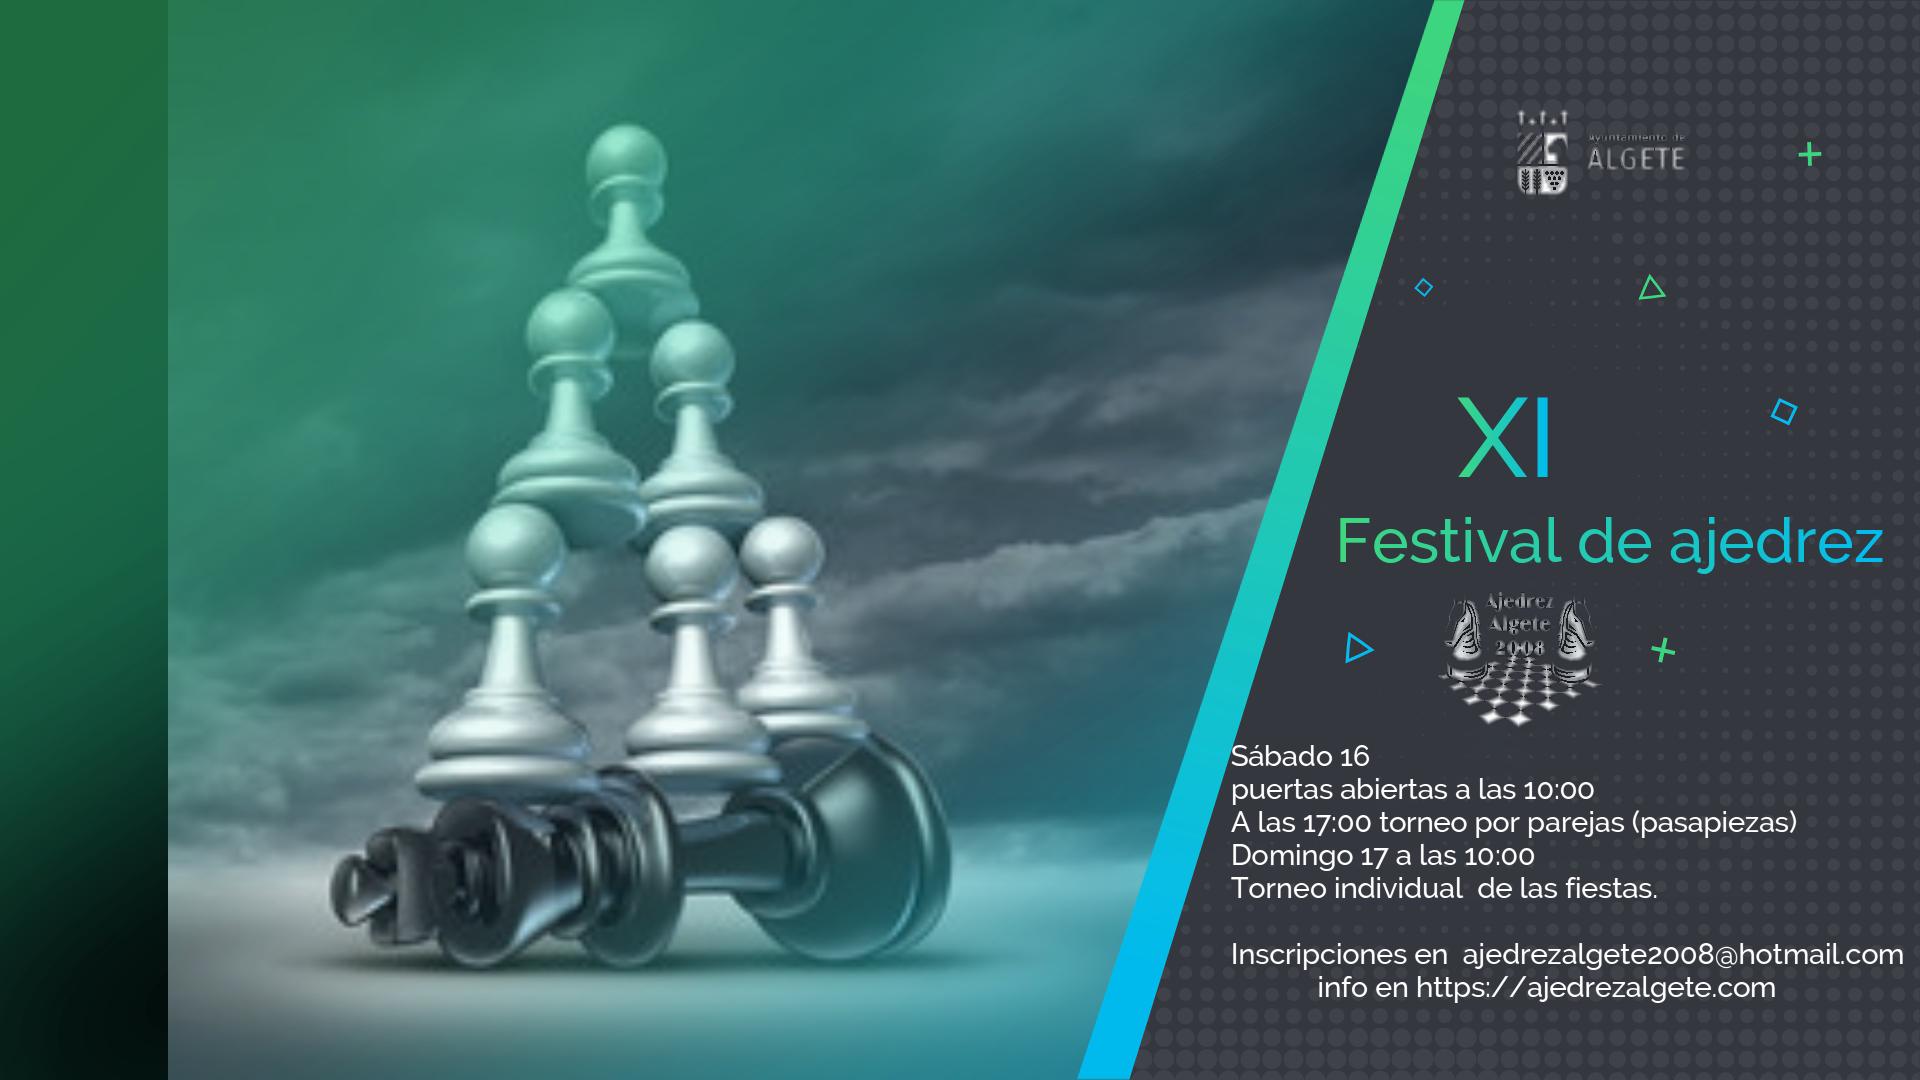 XI Festival de ajedrez en Algete